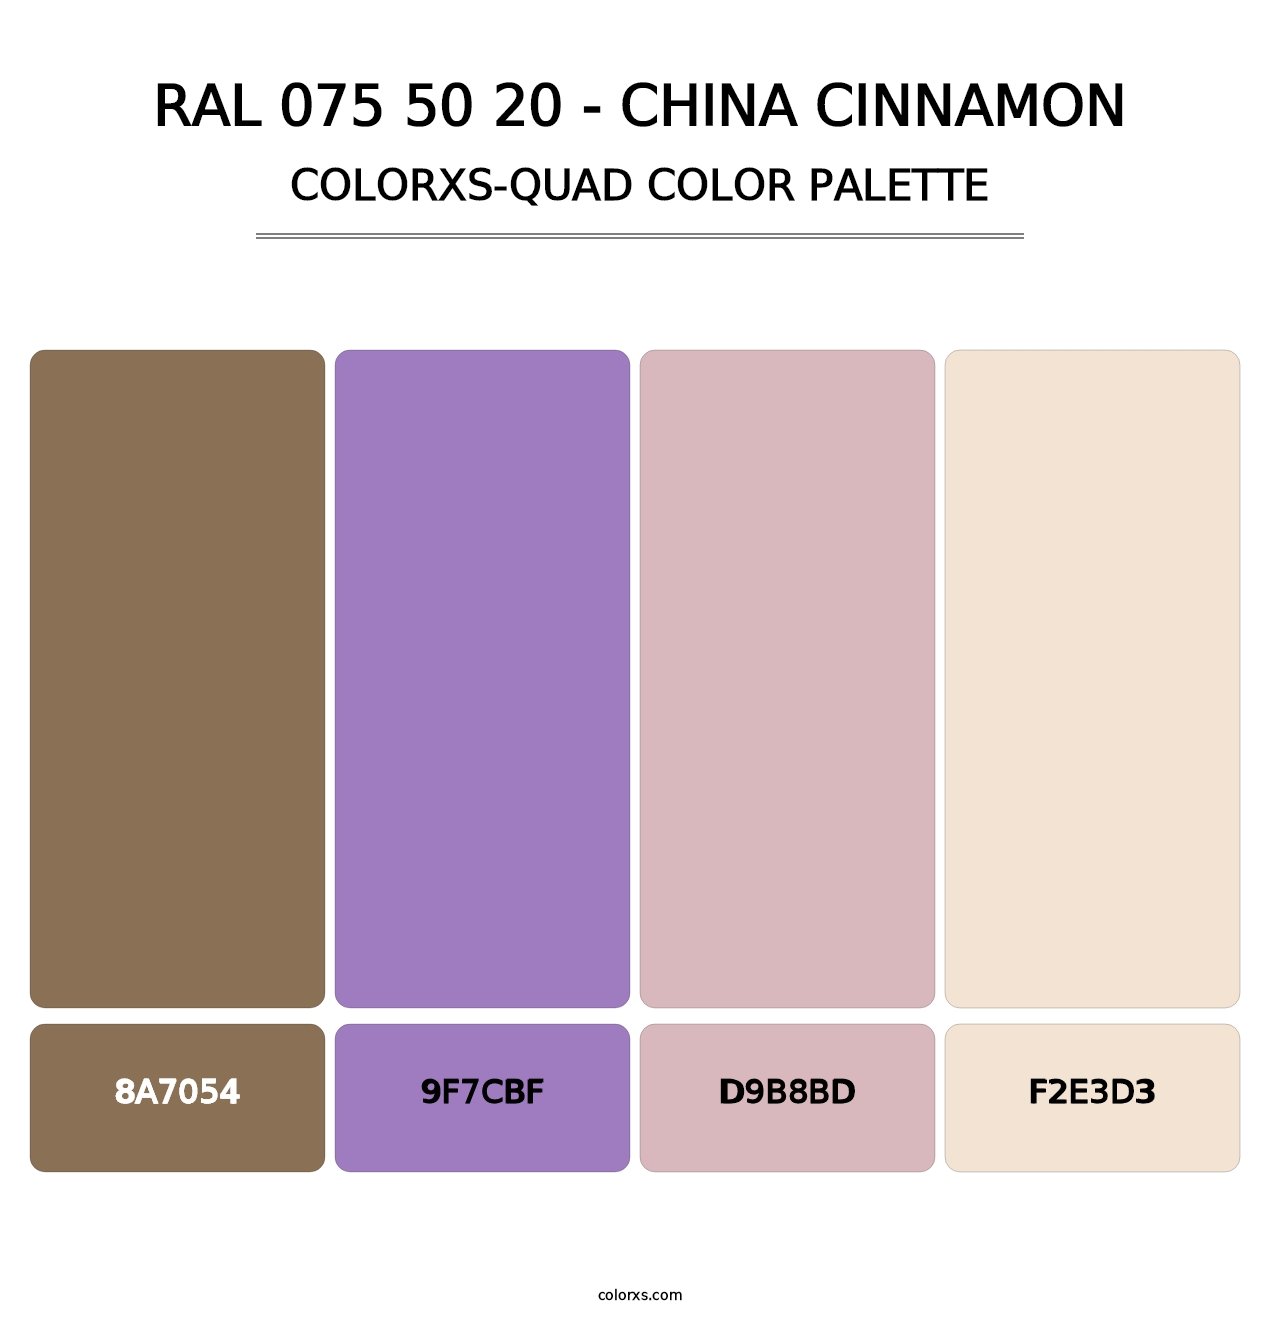 RAL 075 50 20 - China Cinnamon - Colorxs Quad Palette